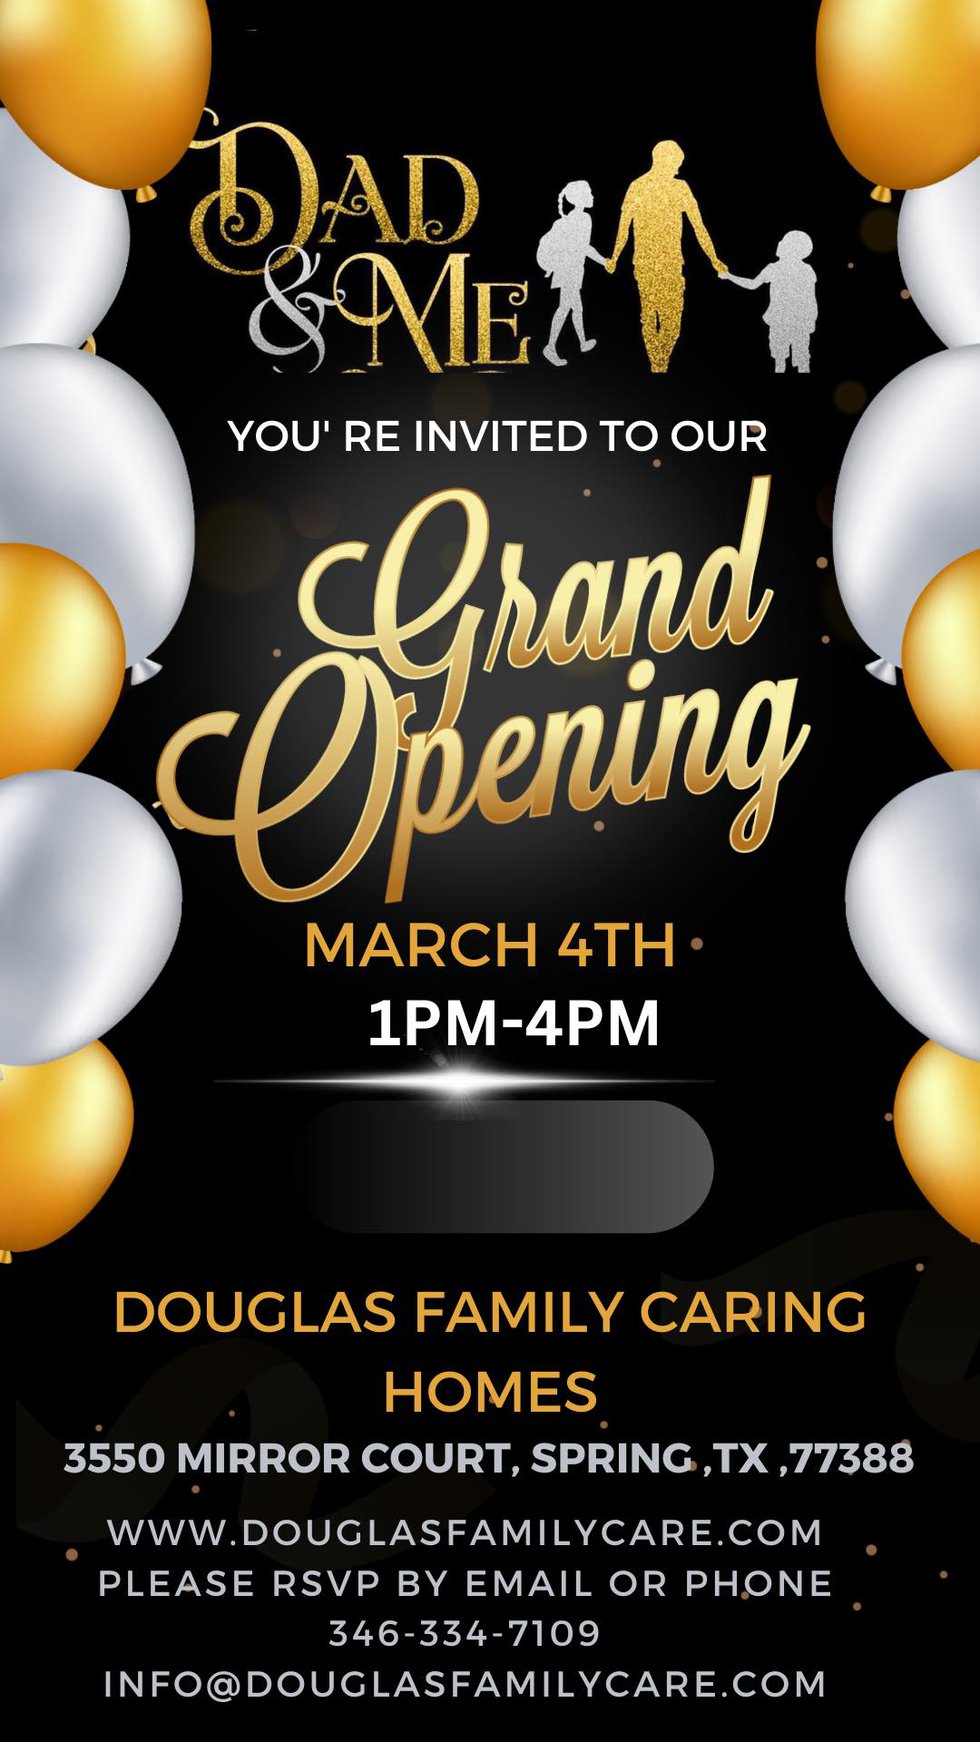 Douglas Family Caring Homes Grand Opening Flyer.jpg